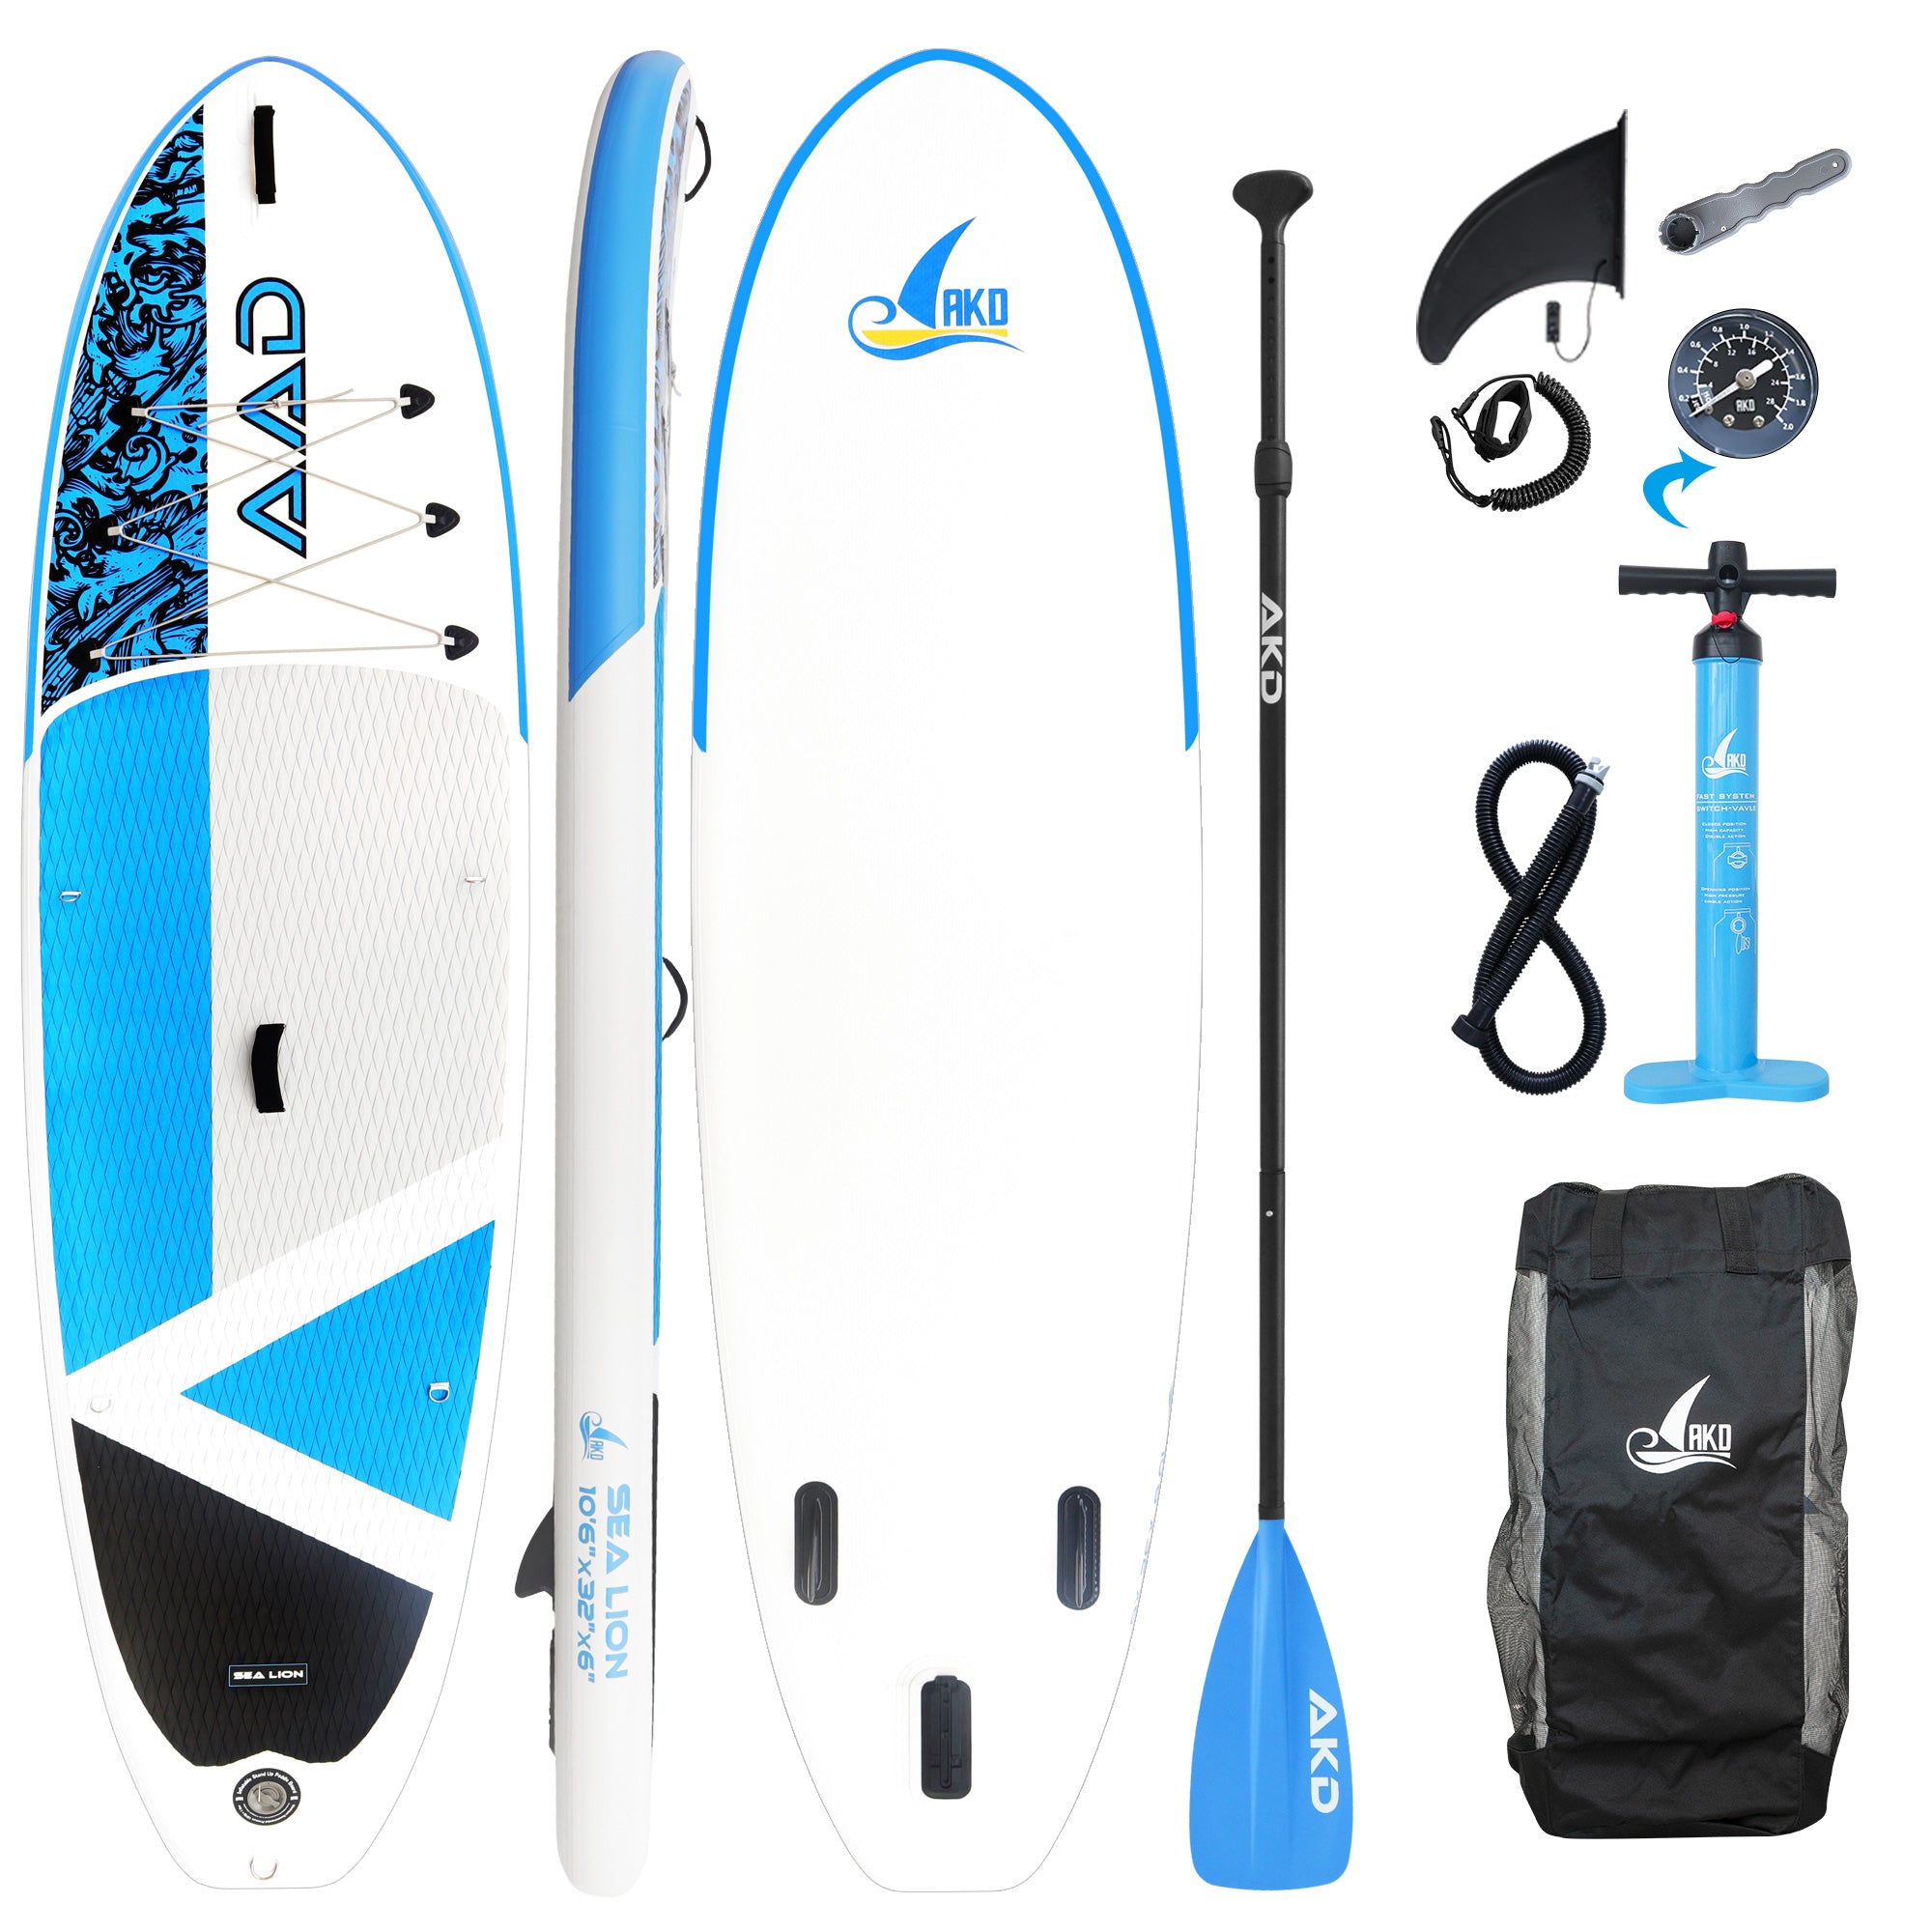 AKD SeaLion Stand Up Paddling Board 10'6" XL 320x86x15cm SUP Board 160kg/337L (Blau)